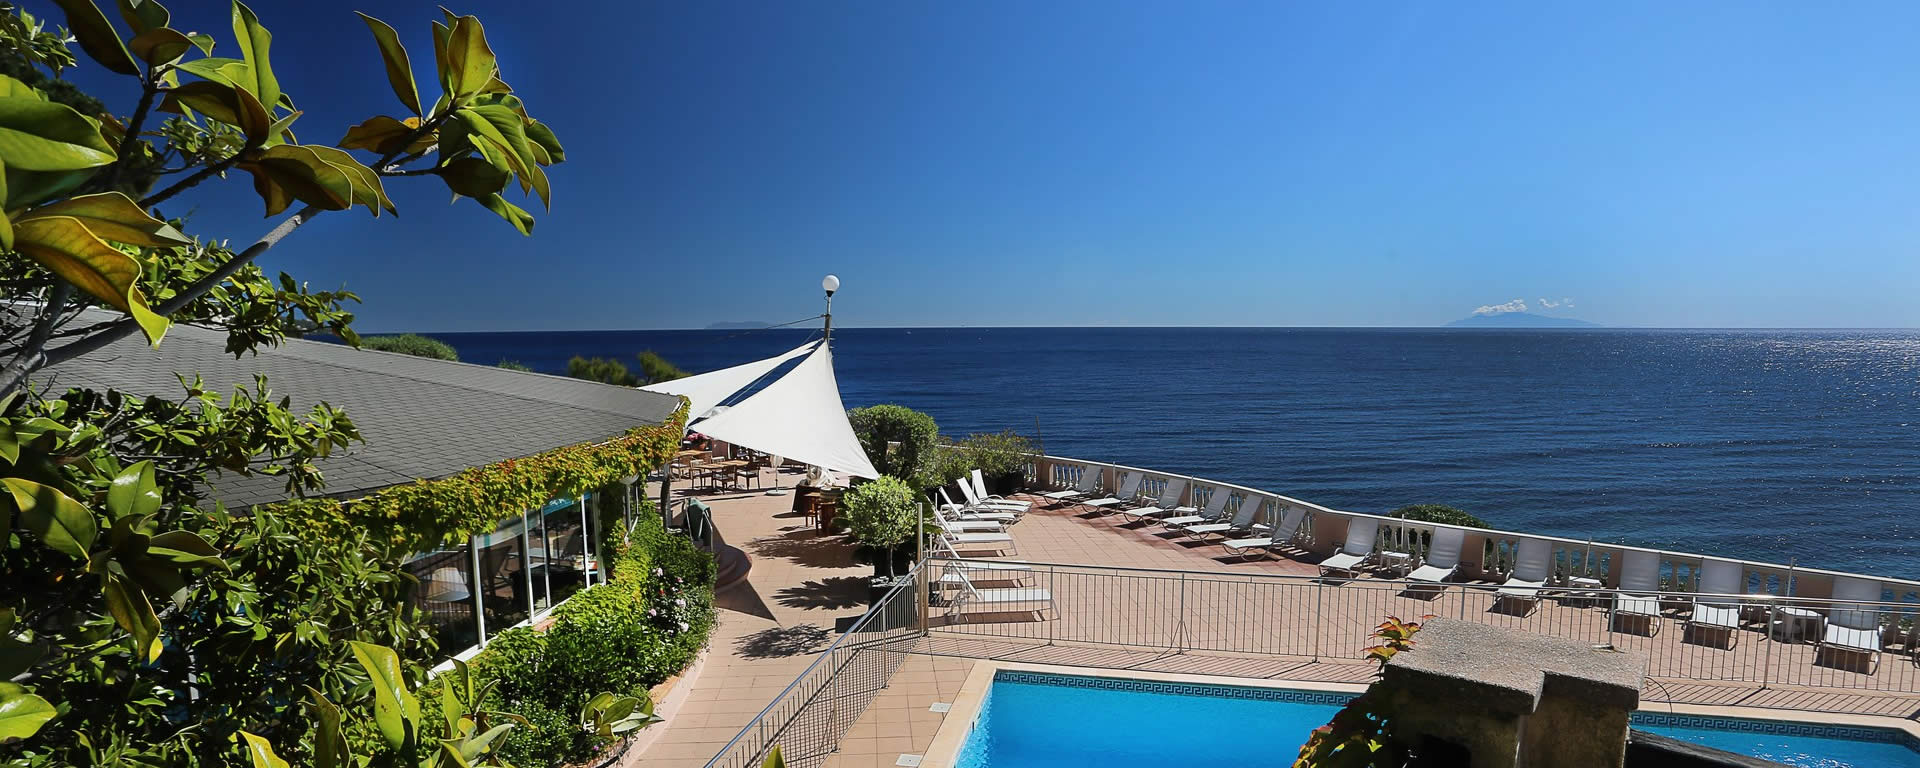 The view from hotel Alivi in Bastia